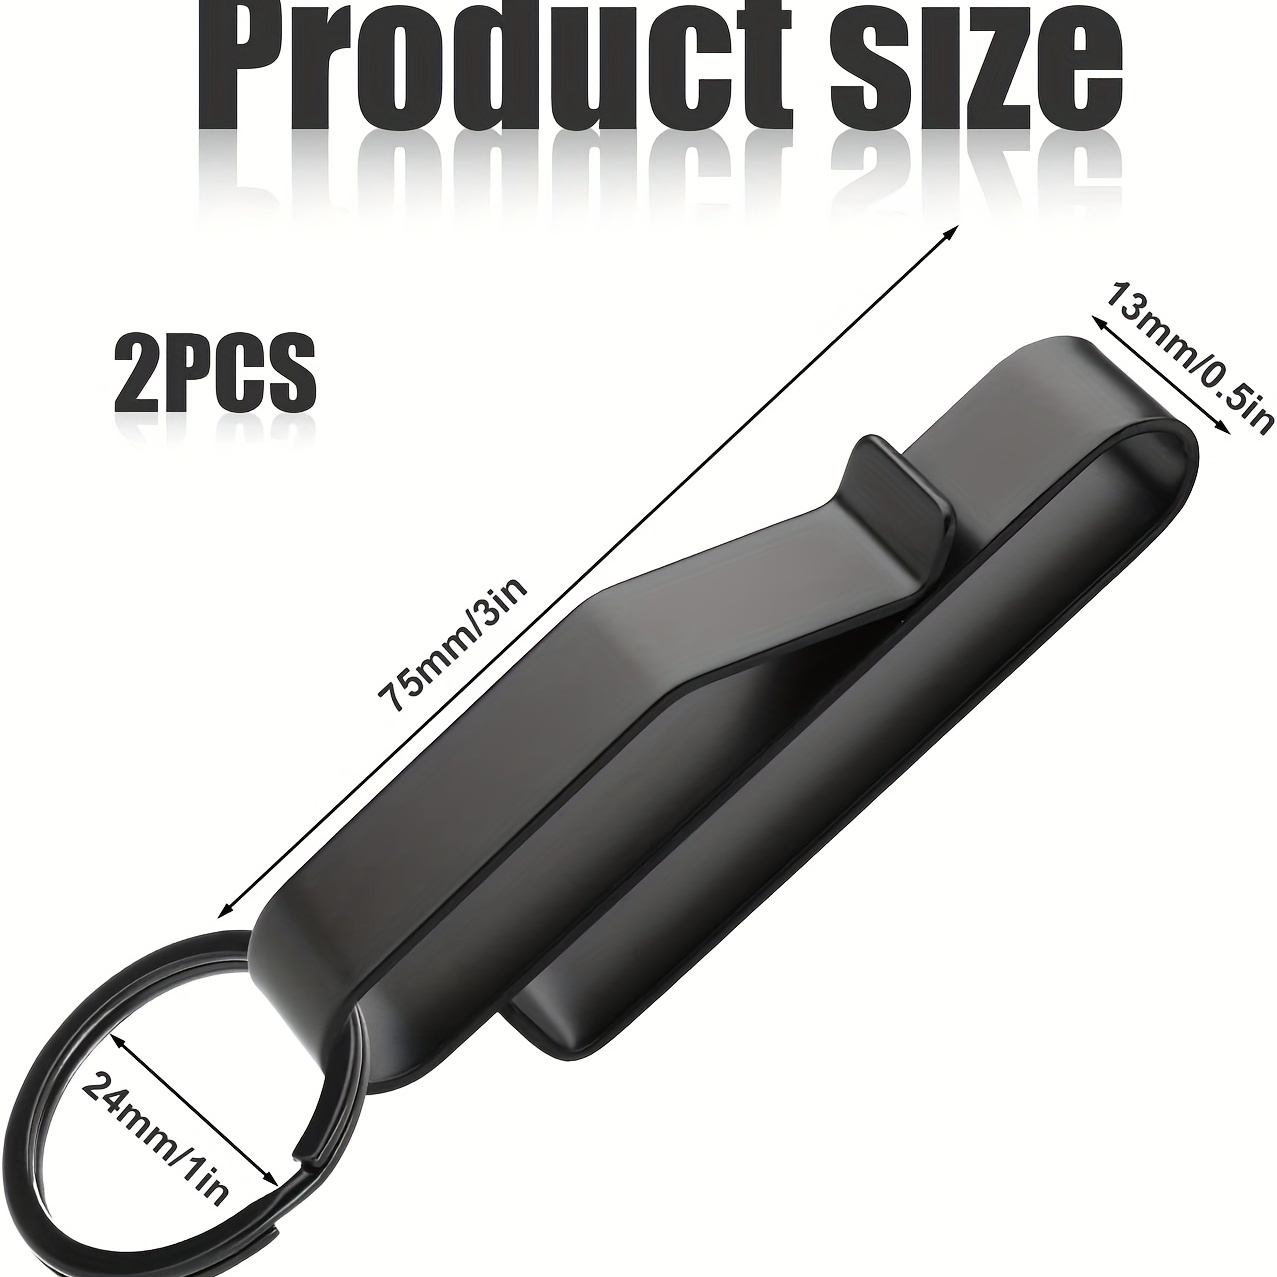 Belt Clip Keychain Holder with Metal Hook & Heavy Duty 1 1/4 Inch Key Ring